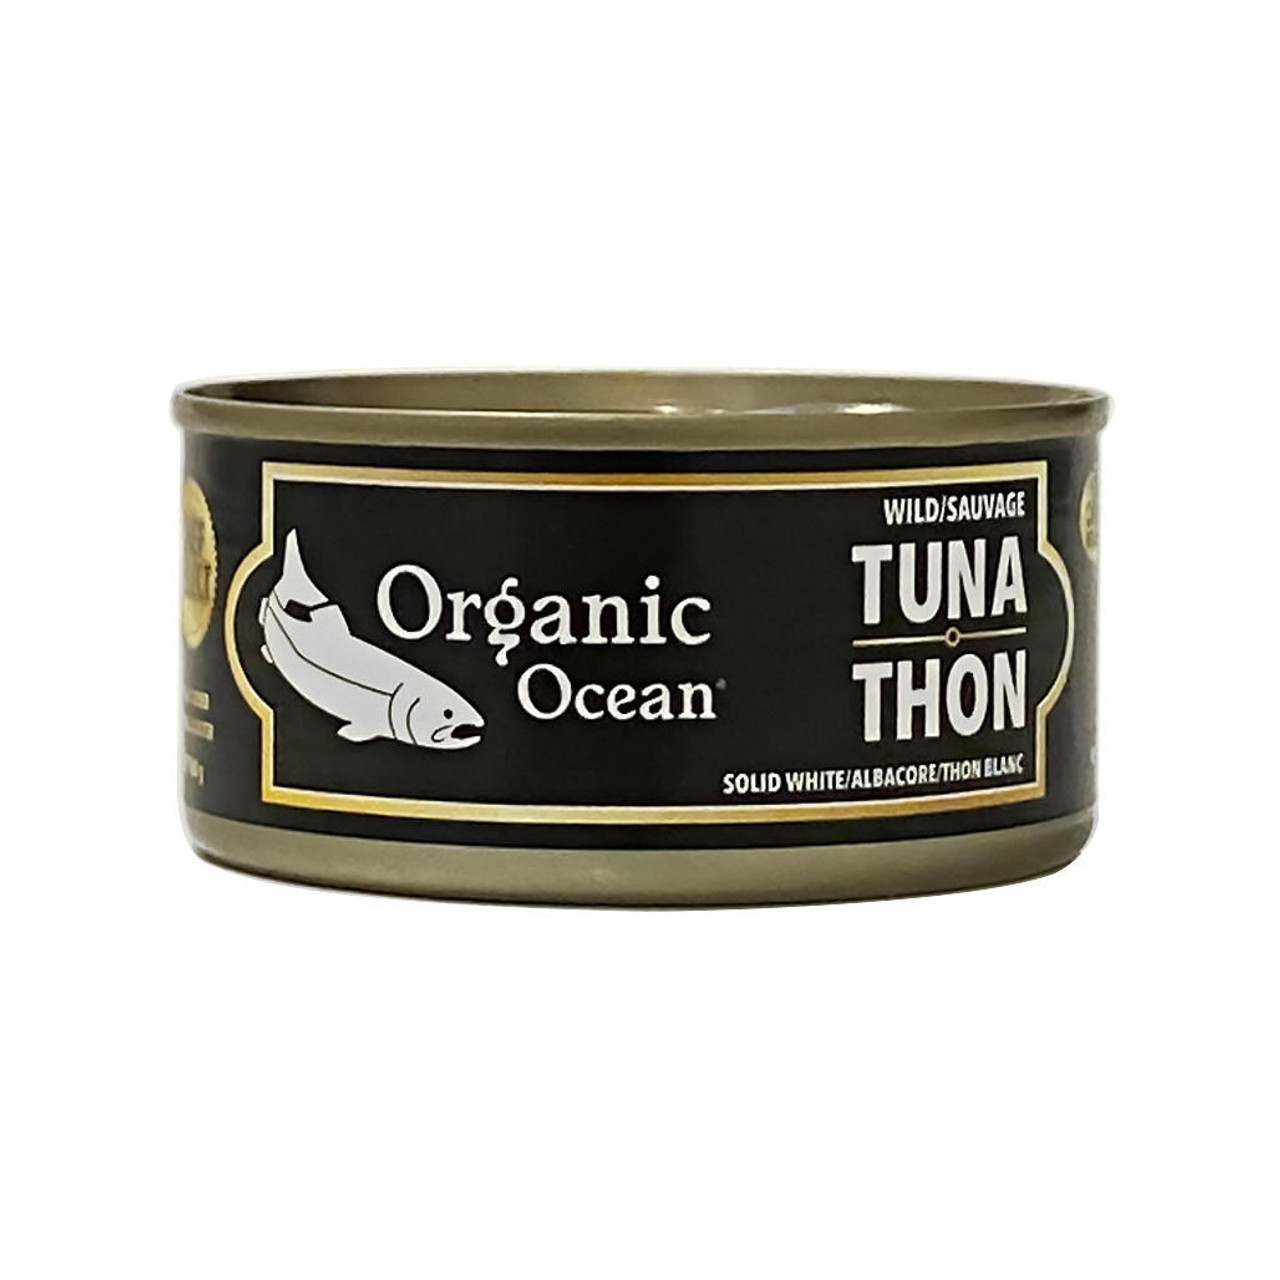 Canned: Wild Albacore Tuna